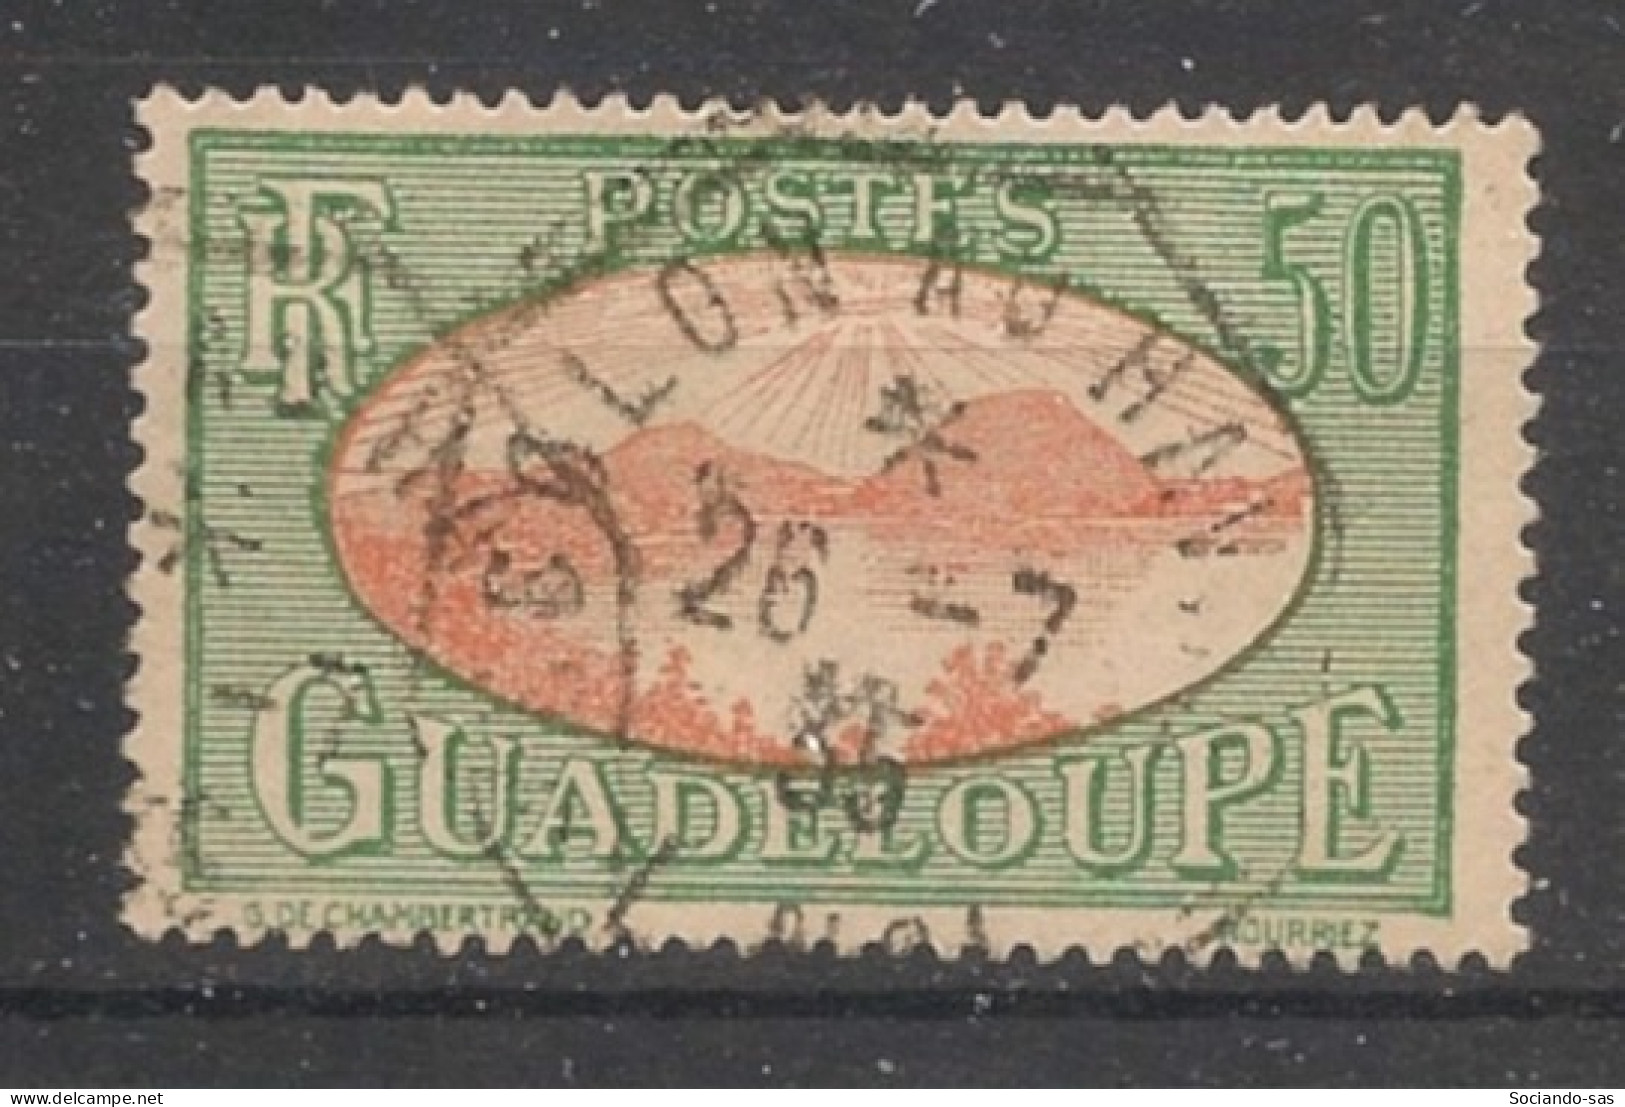 GUADELOUPE - 1928-38 - N°YT. 110 - Rade Des Saintes 50c - Oblitéré "Colon Au Havre" / Used - Used Stamps